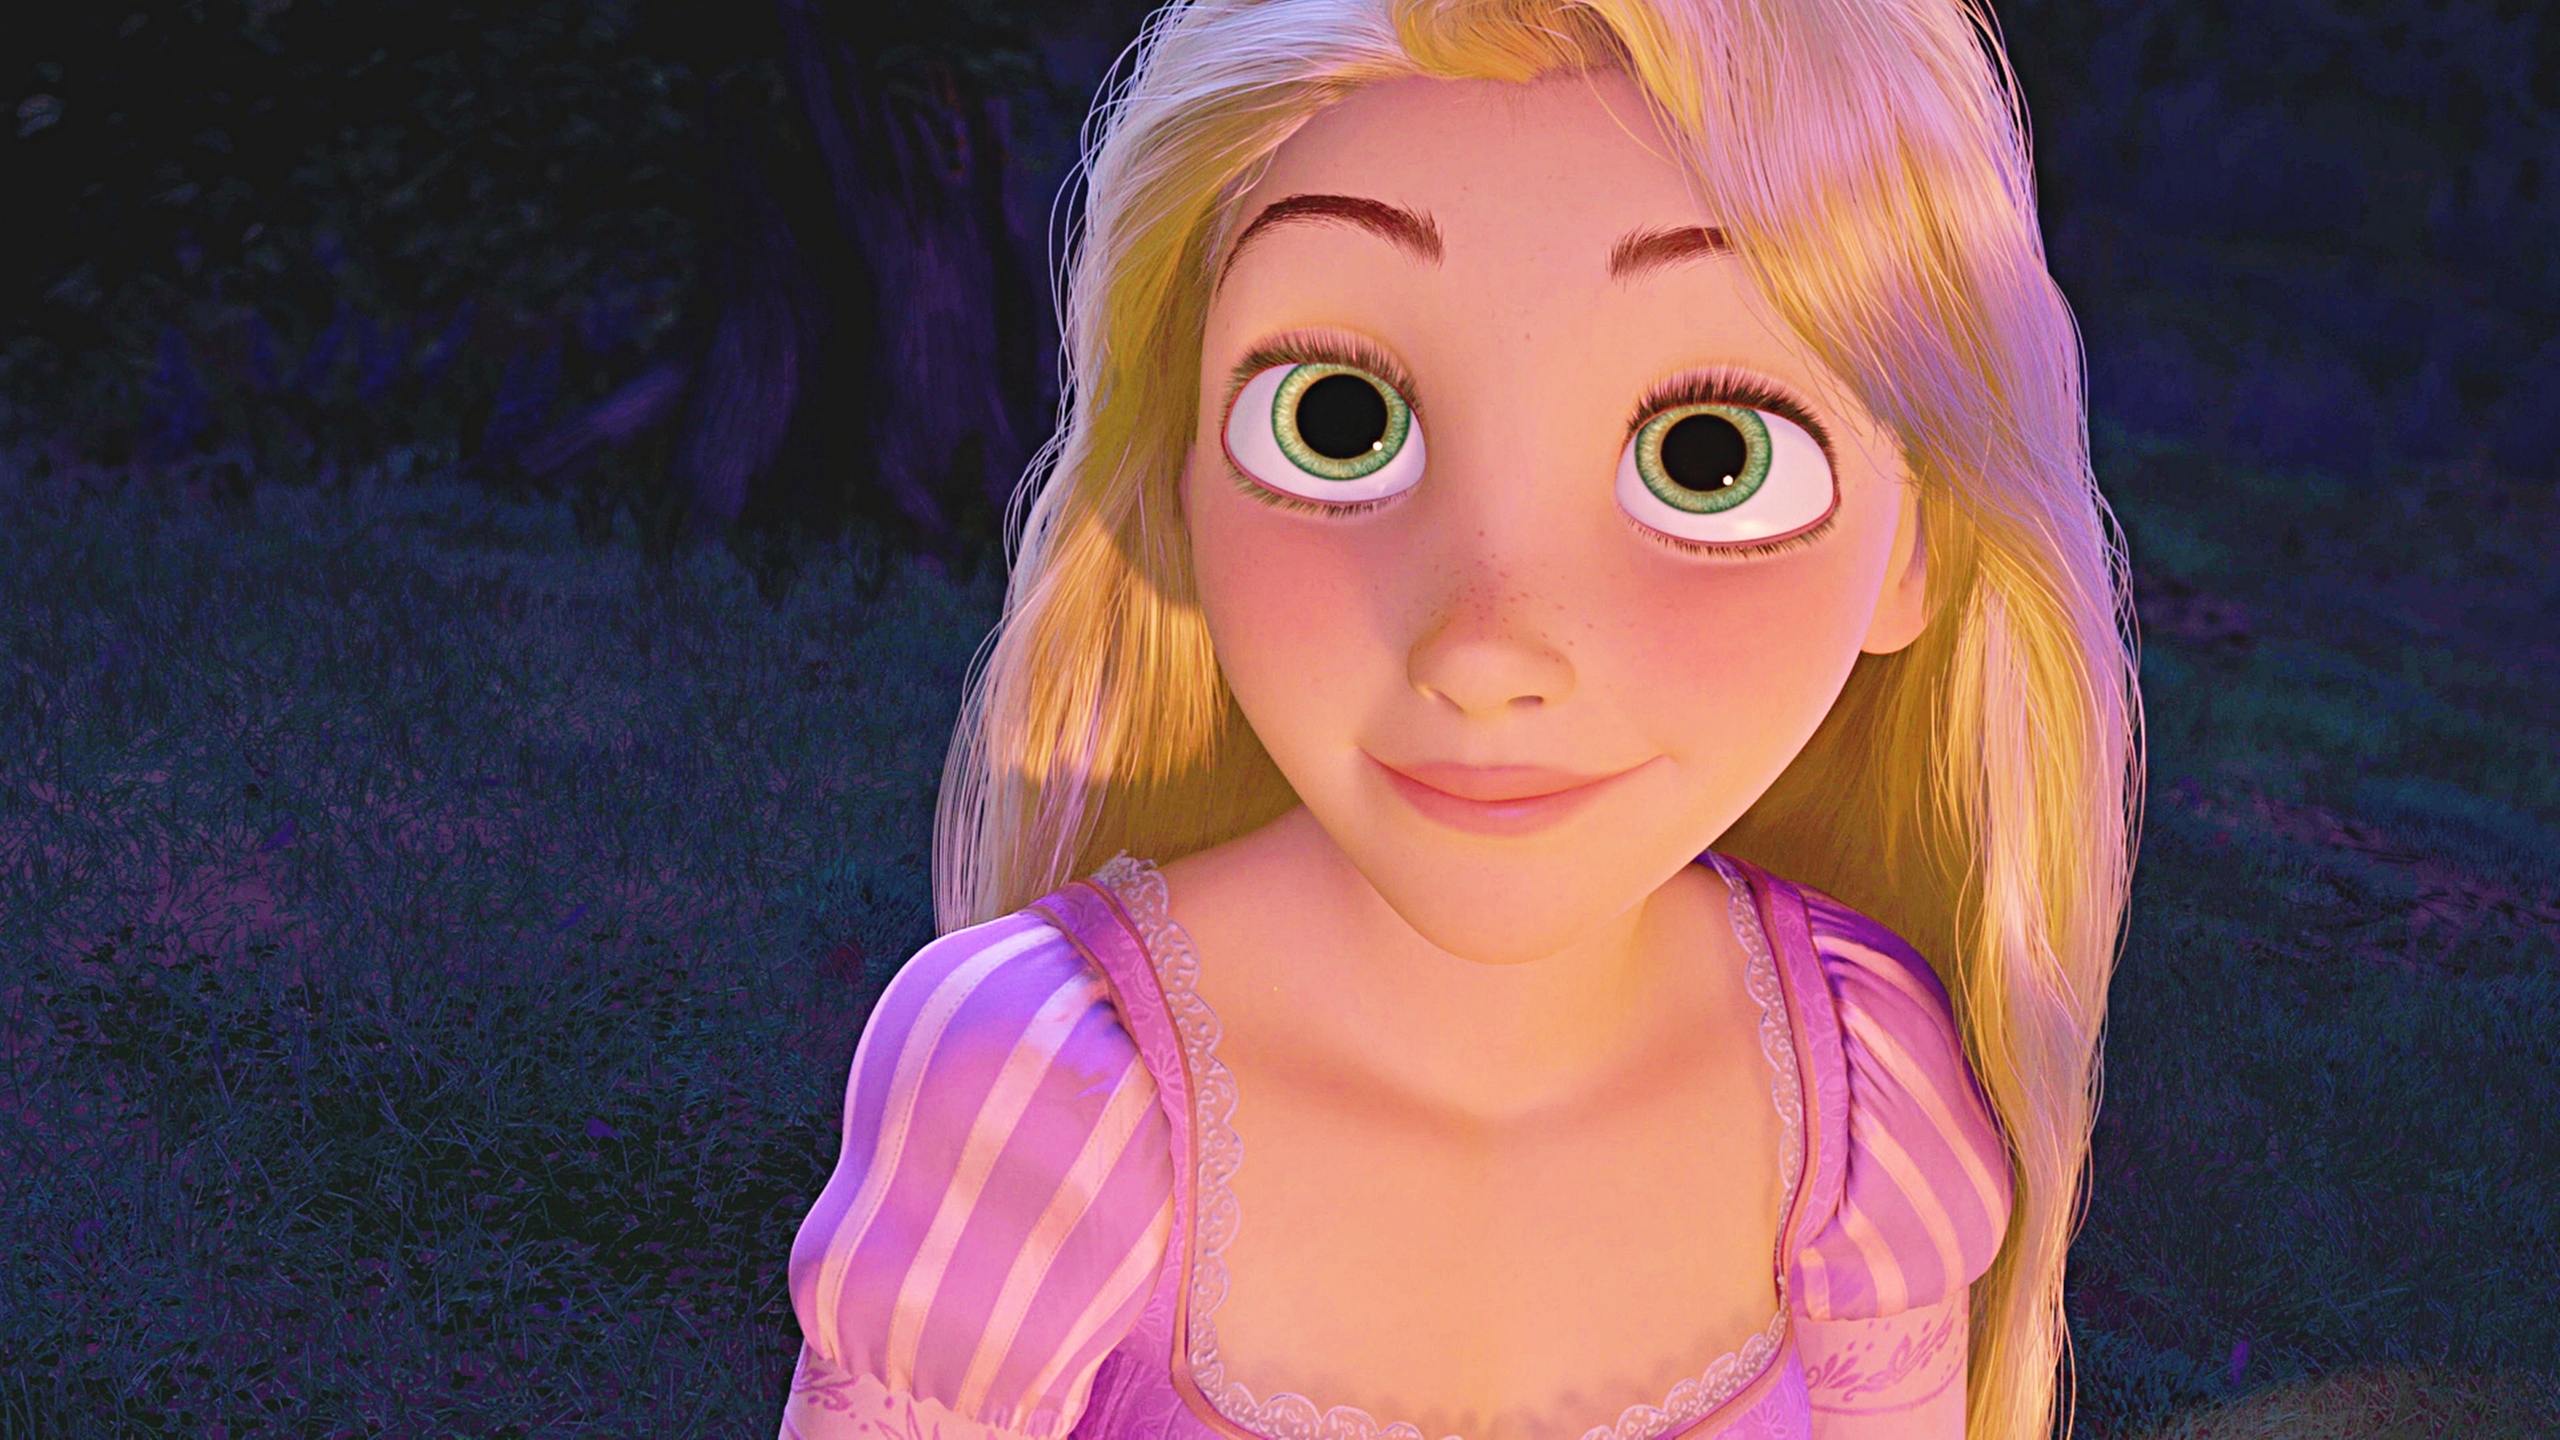 walt-disney-screencaps-princess-rapunzel-walt-disney-characters-32040684-2560-1440